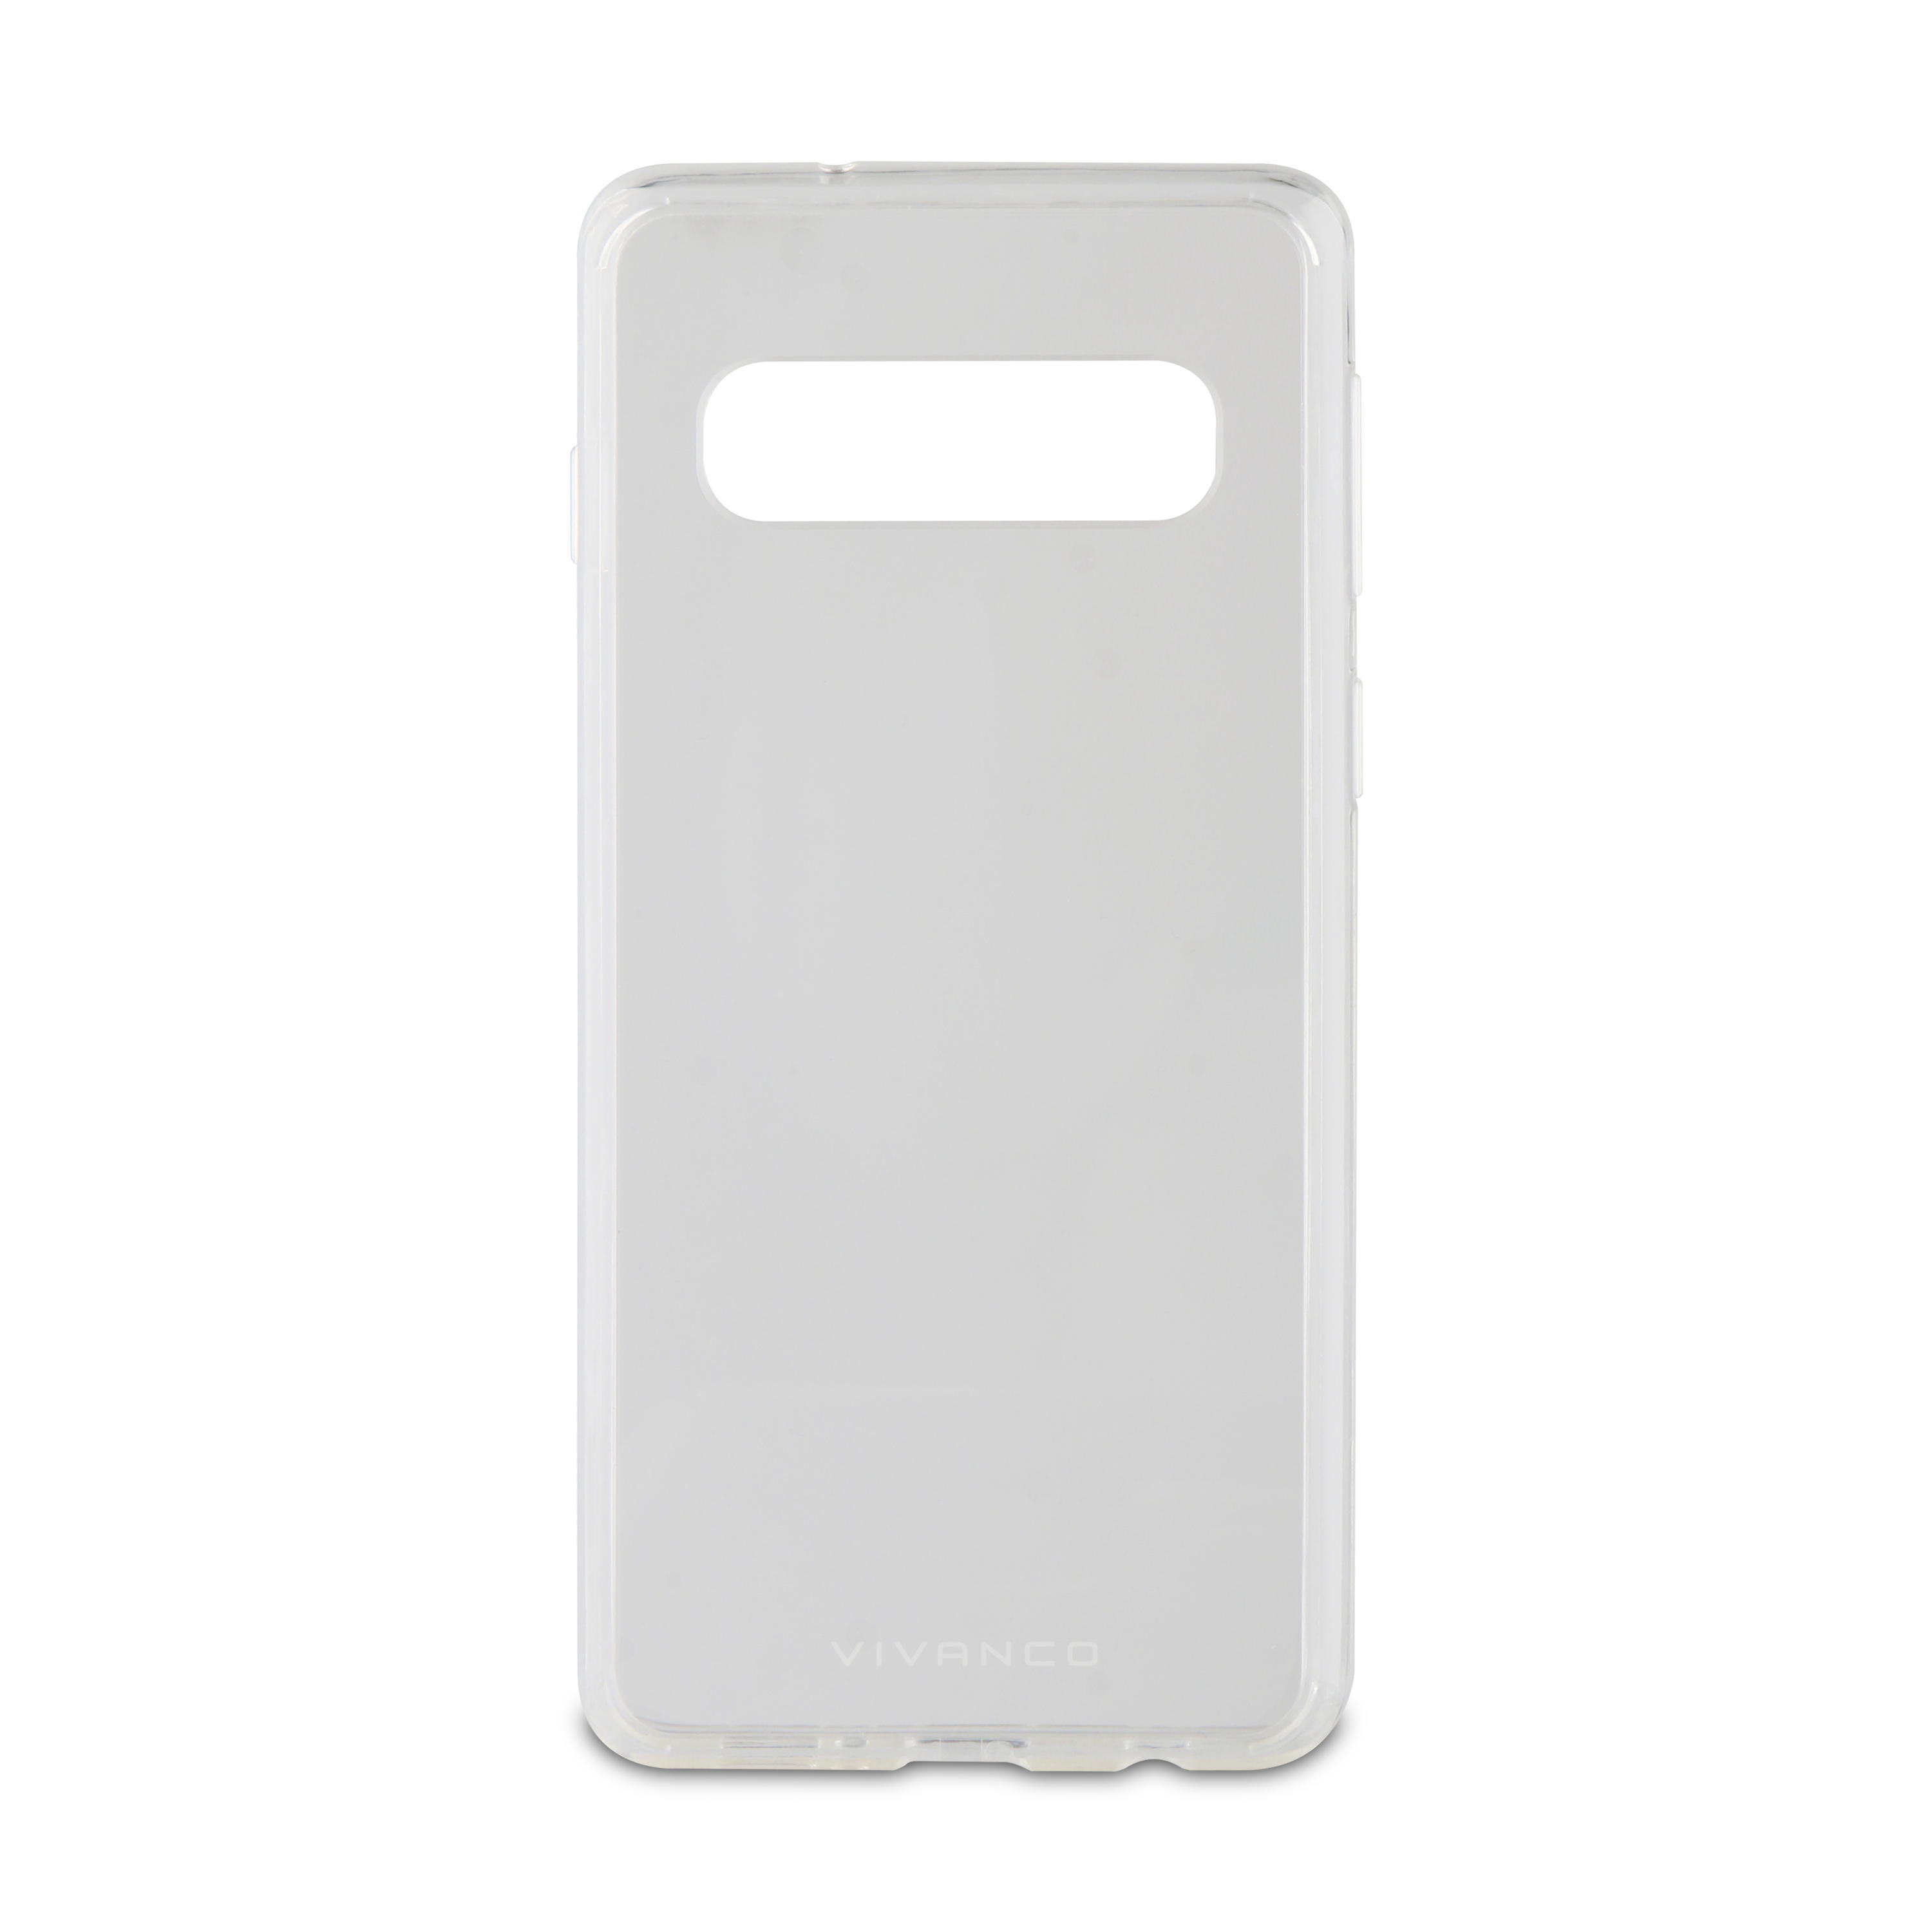 S10, Transparent Backcover, VIVANCO Steady, Galaxy Safe Samsung, &